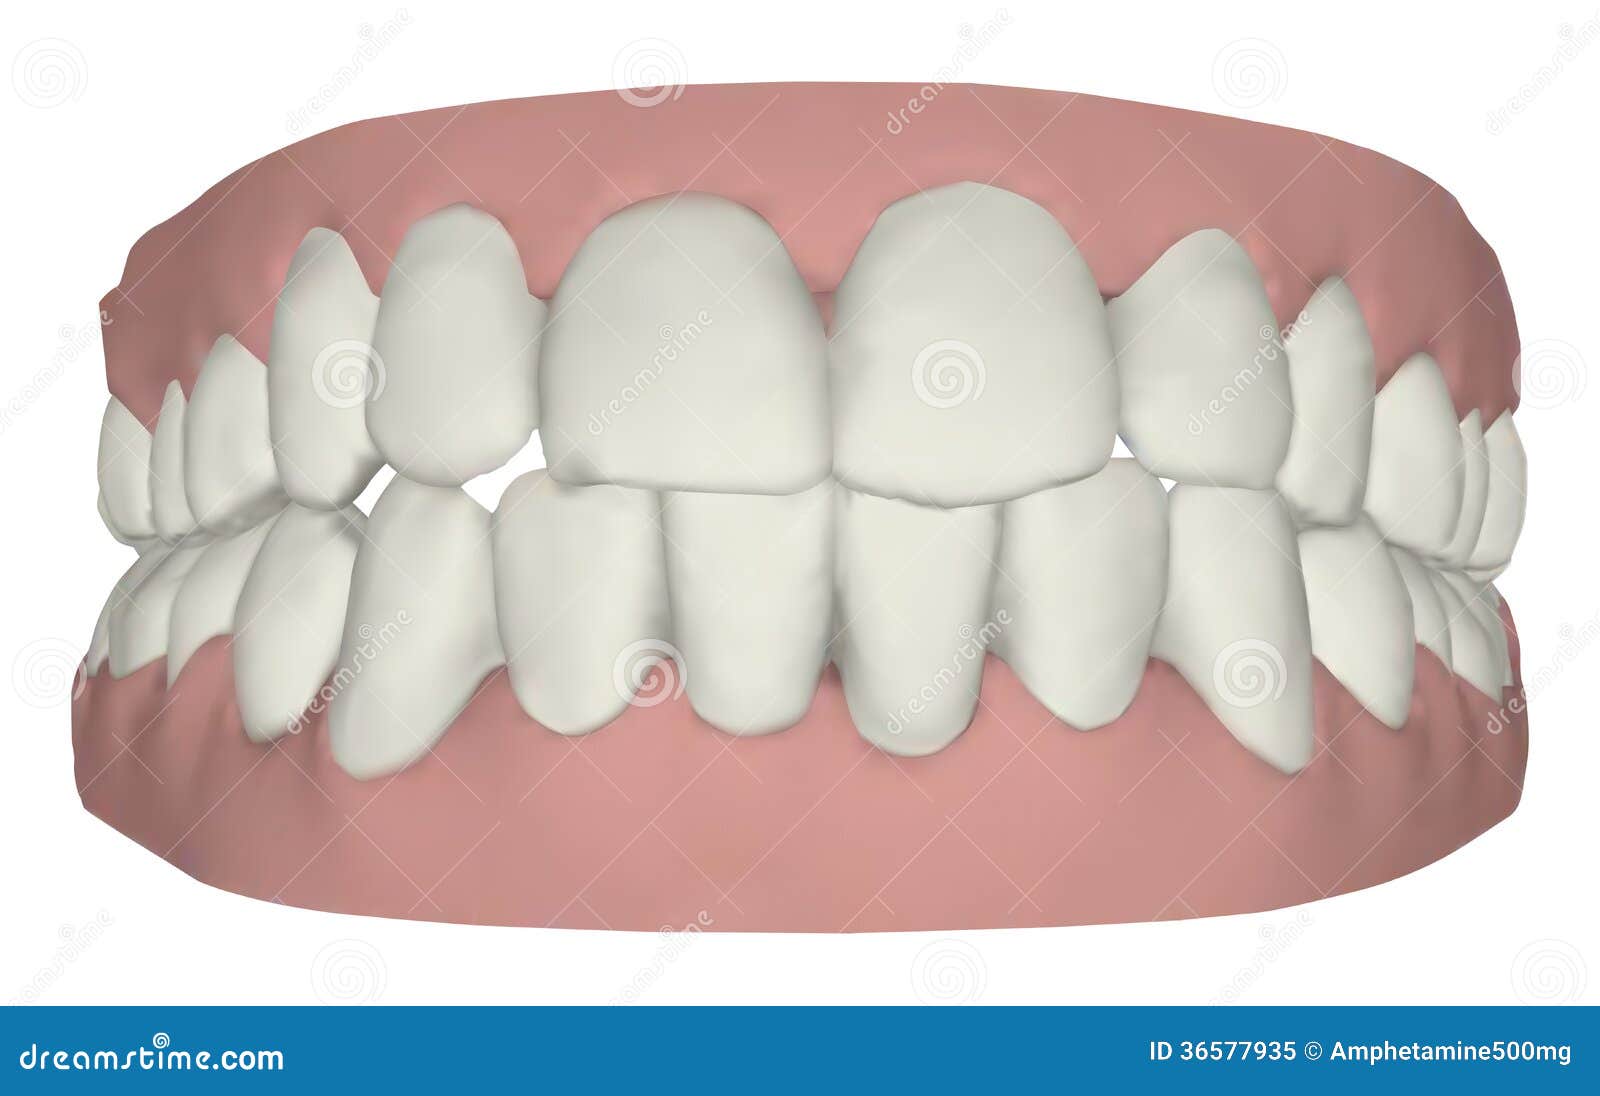 gums and teeth